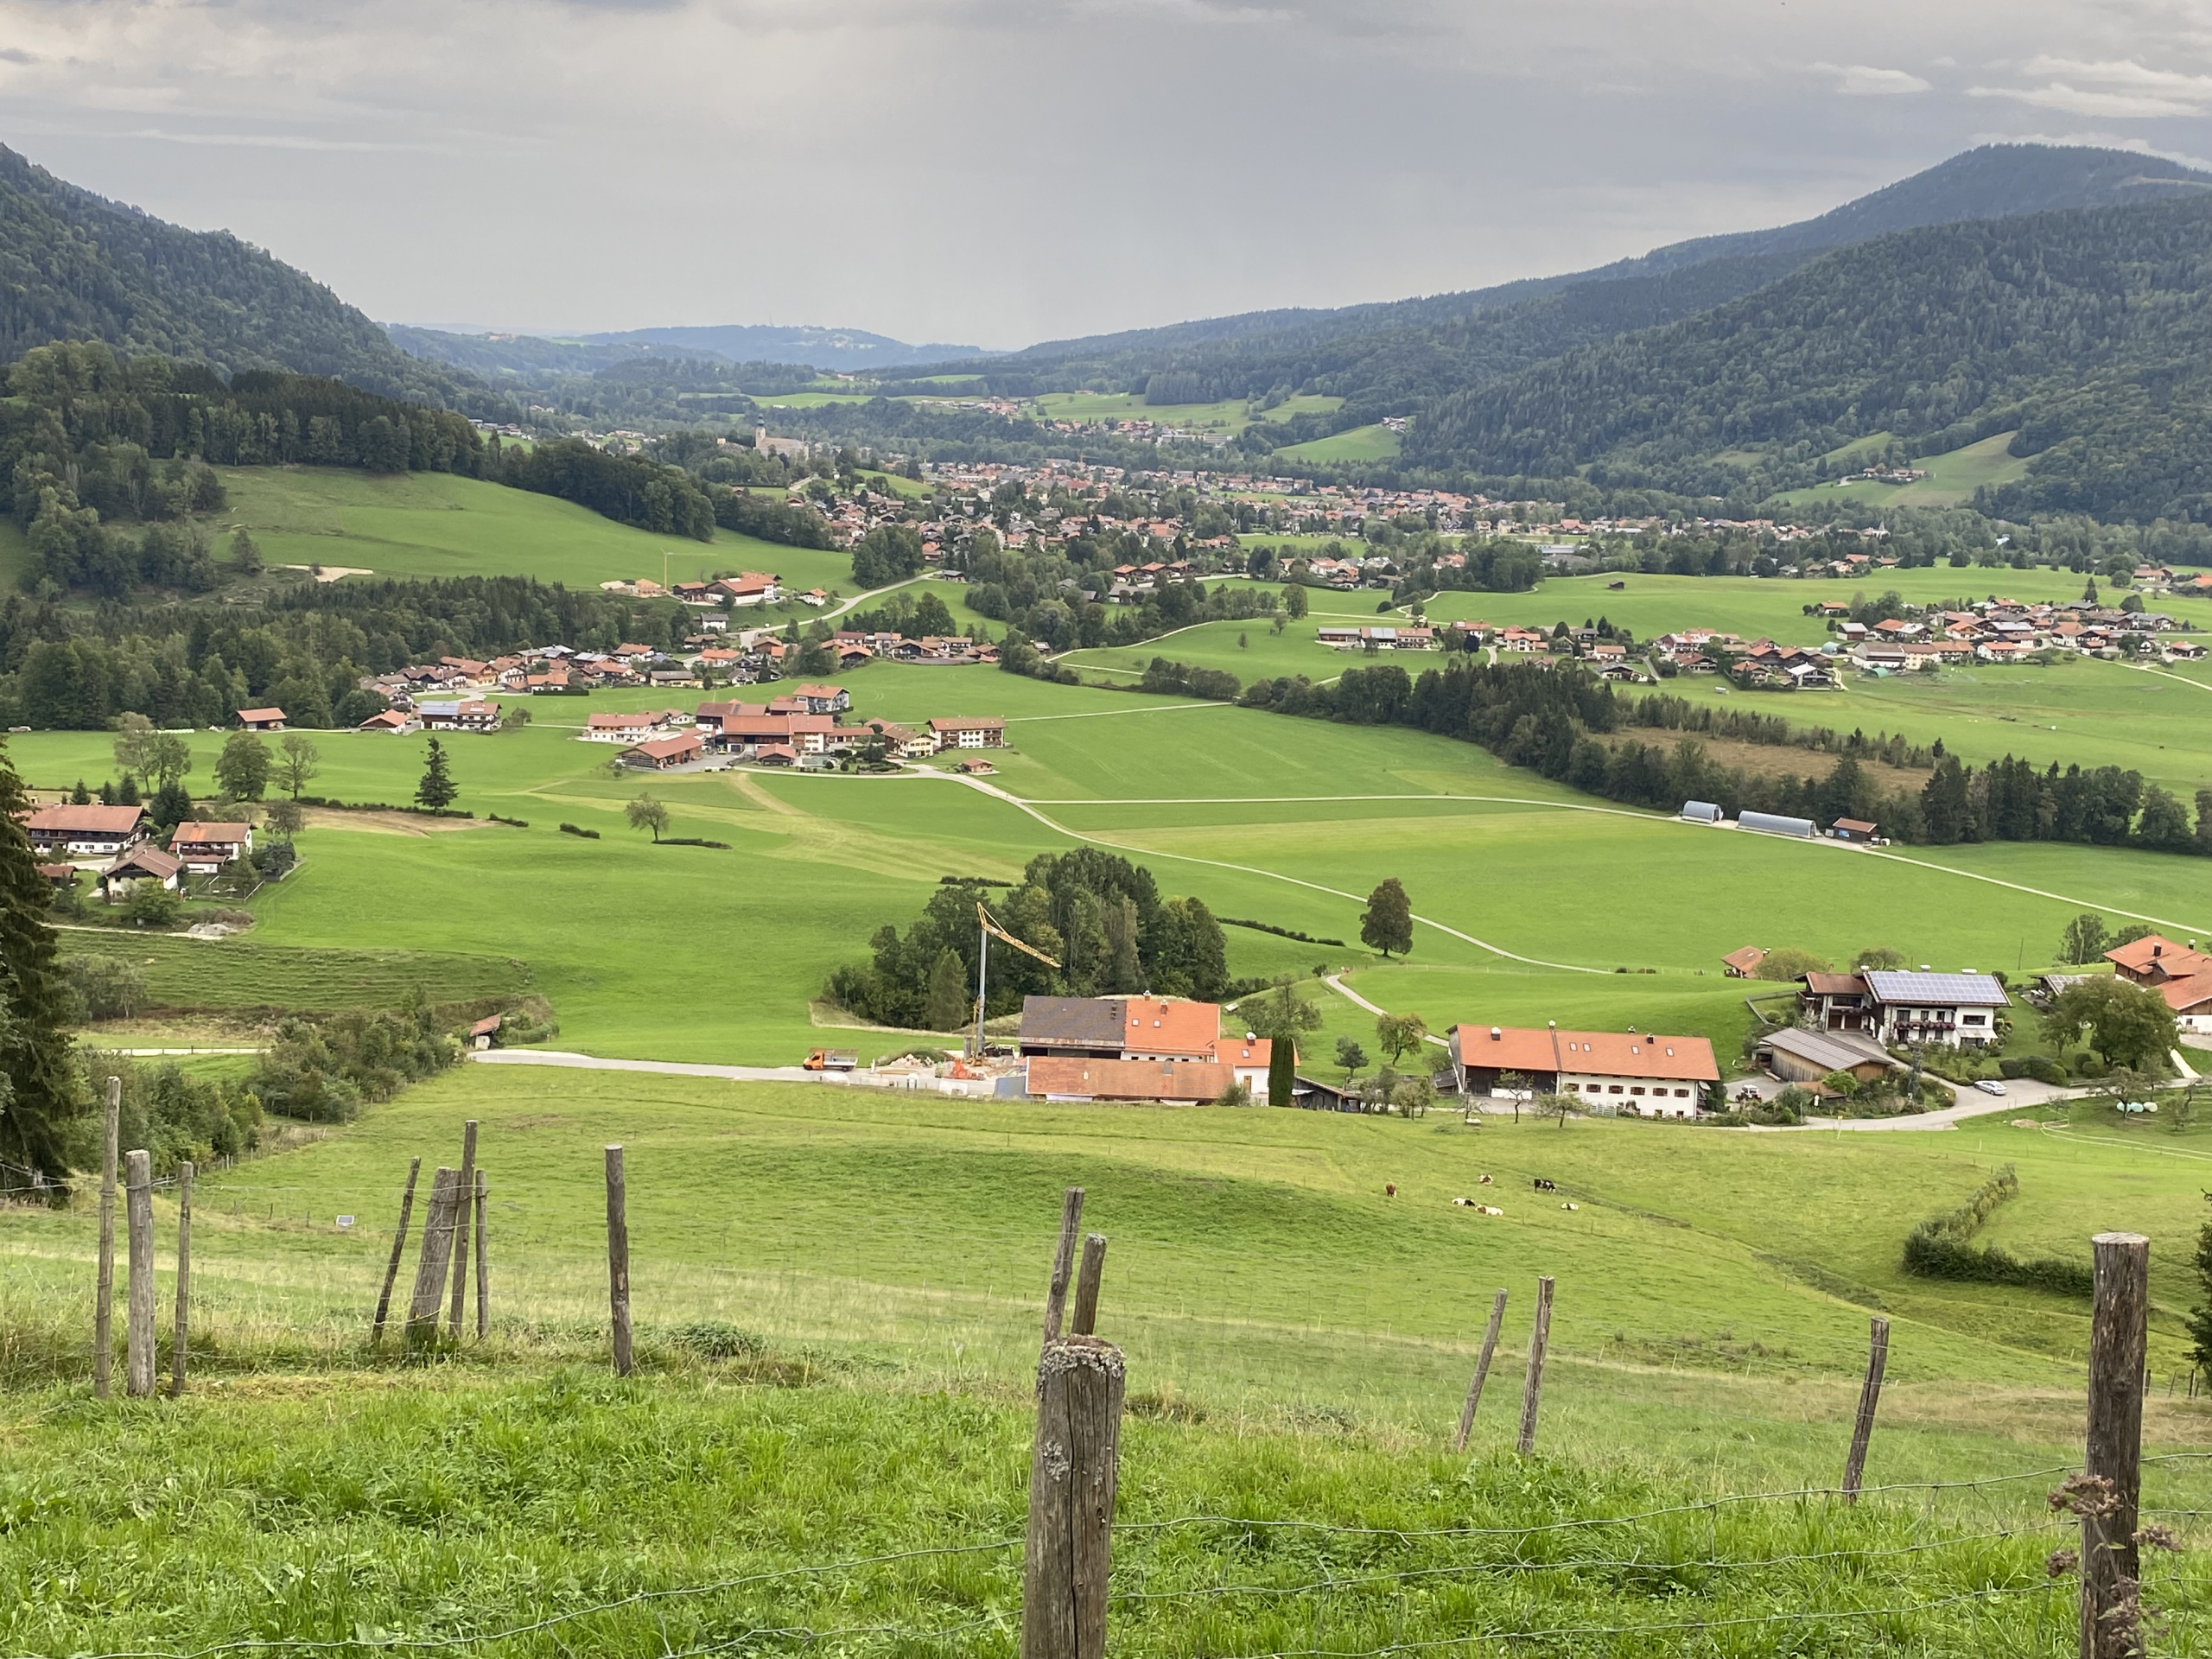 View from Berggasthaus Weingarten in Ruhpolding, Bavarian village in Germany